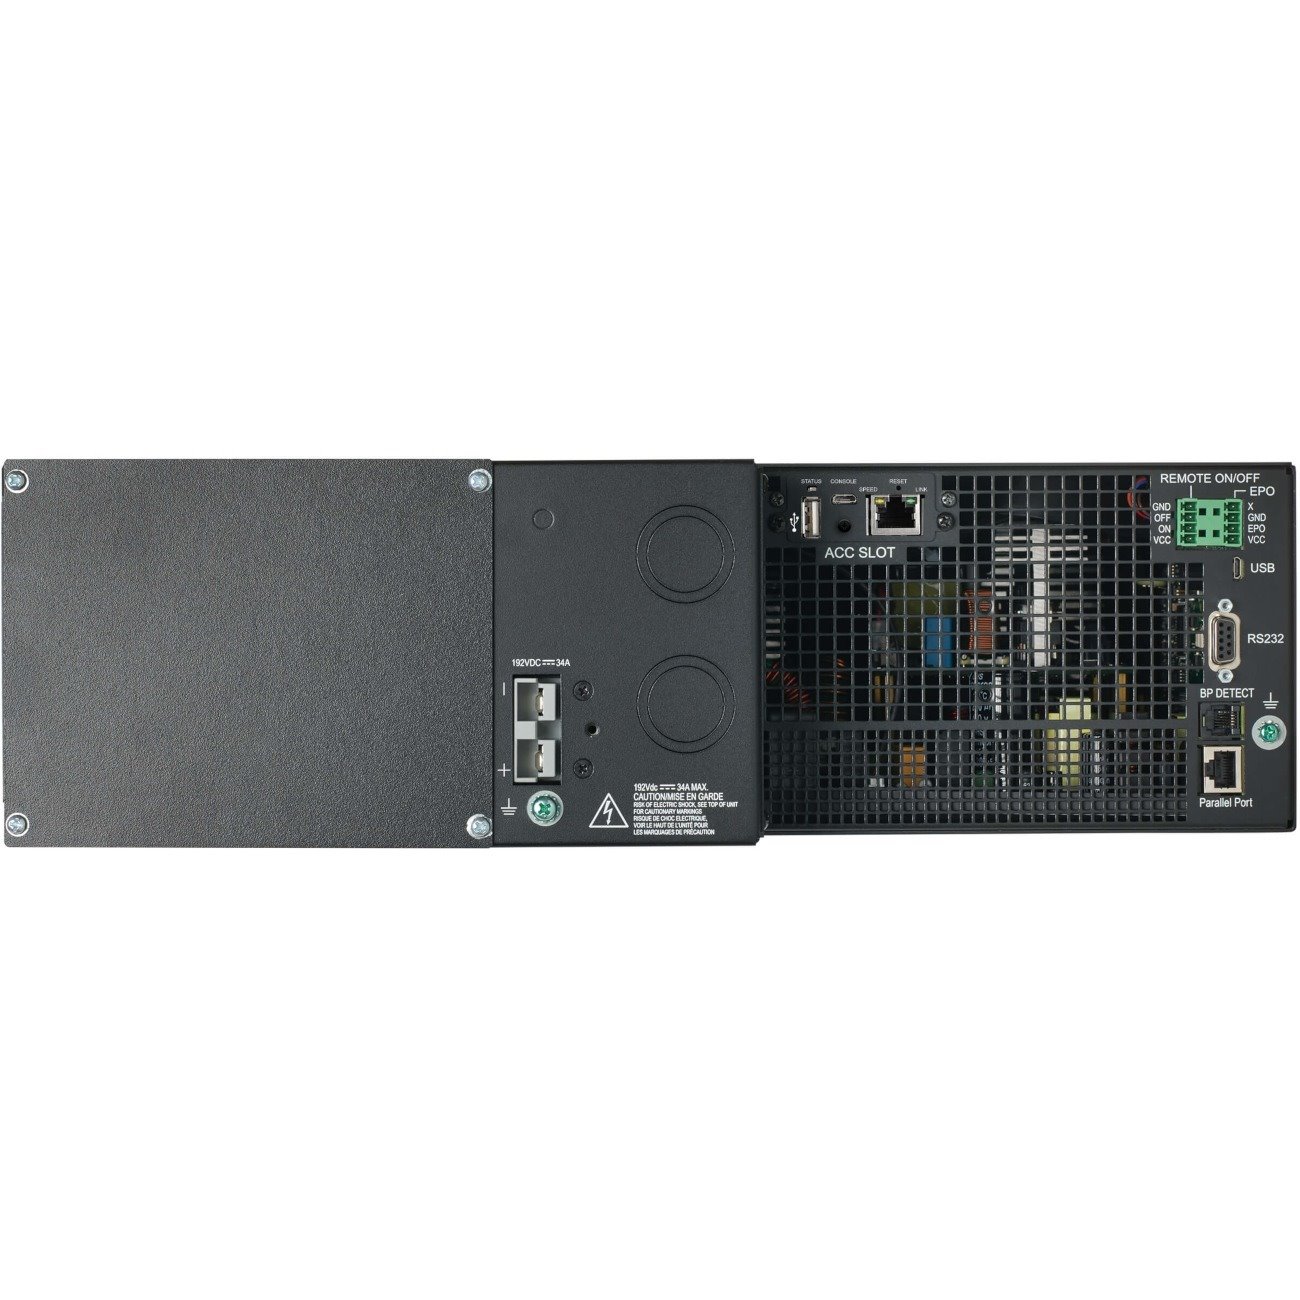 Tripp Lite by Eaton UPS 200-240V 5000VA 5000W On-Line Double-Conversion UPS Unity Power Factor Hardwire Input/Output 3U